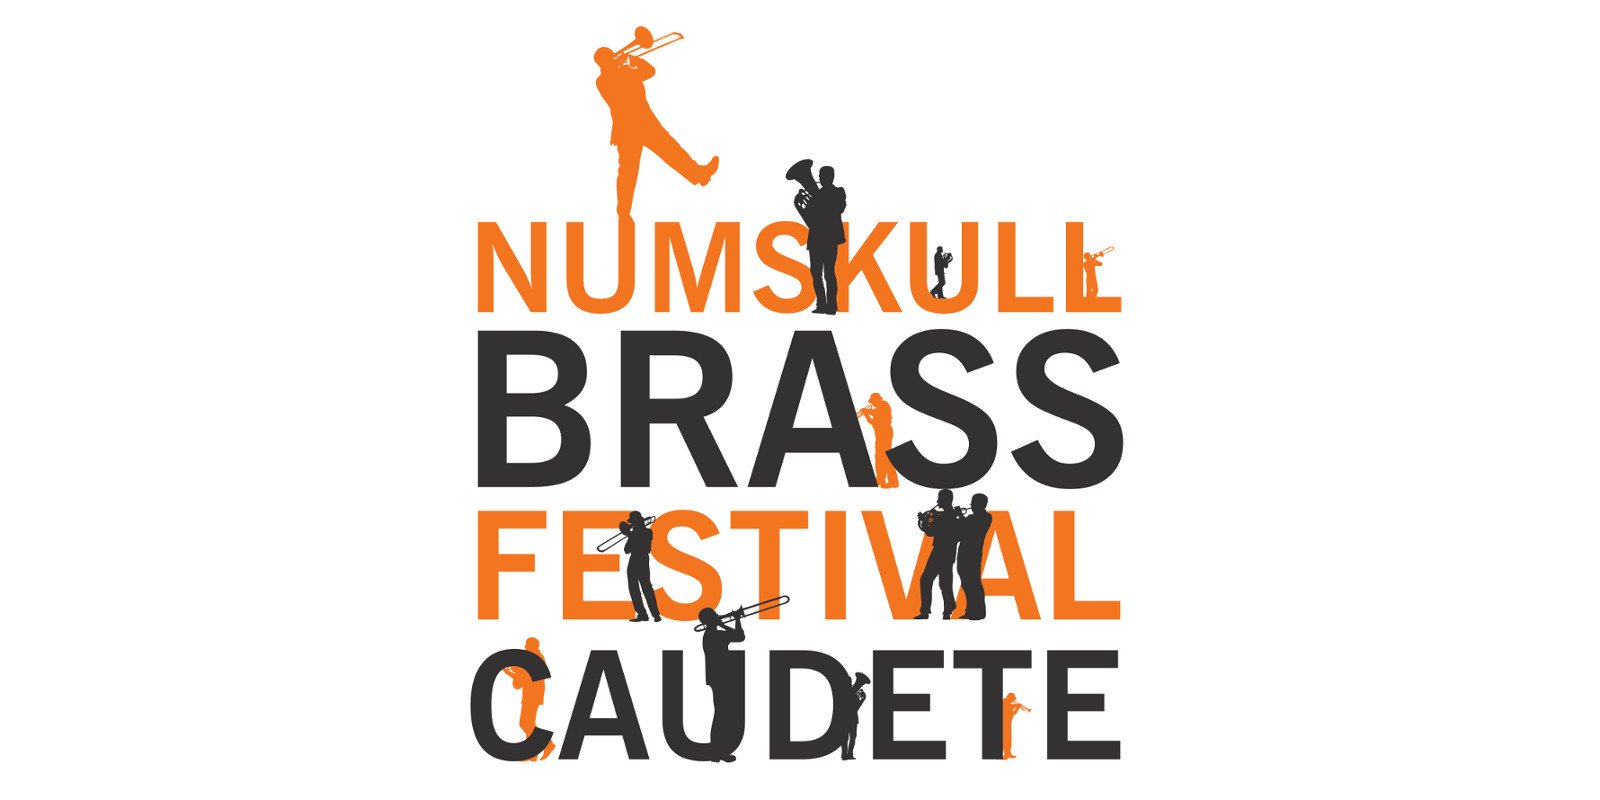 Numskull Brass Festival Caudete